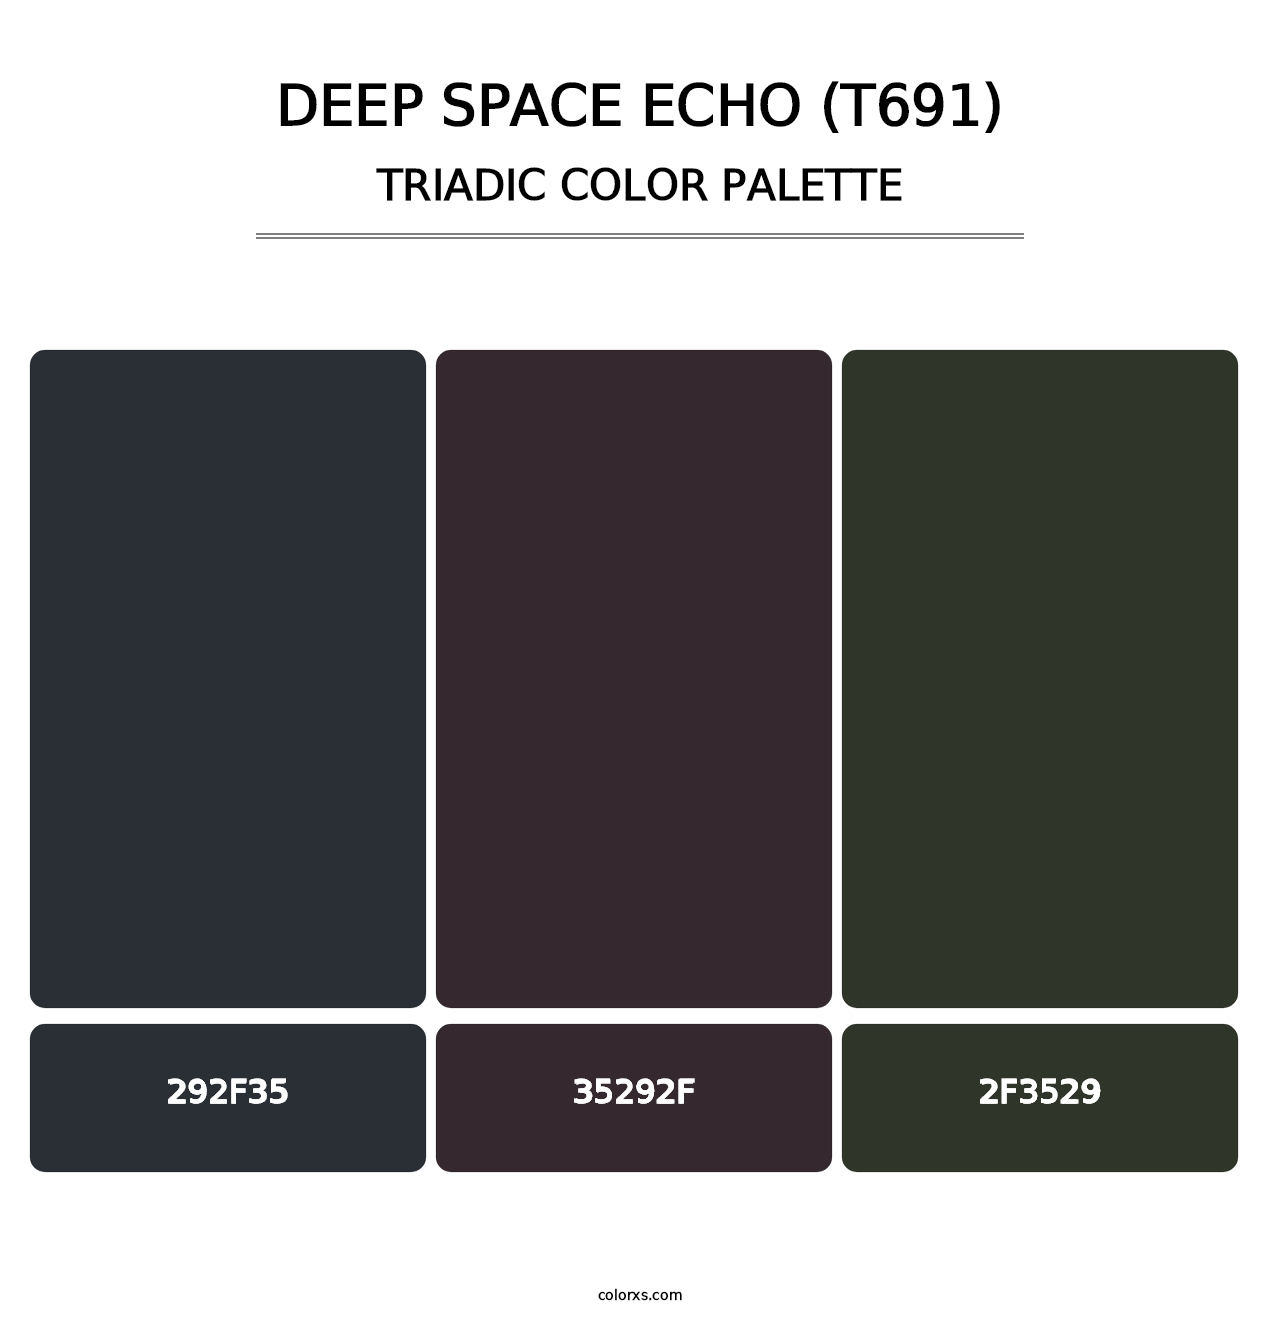 Deep Space Echo (T691) - Triadic Color Palette